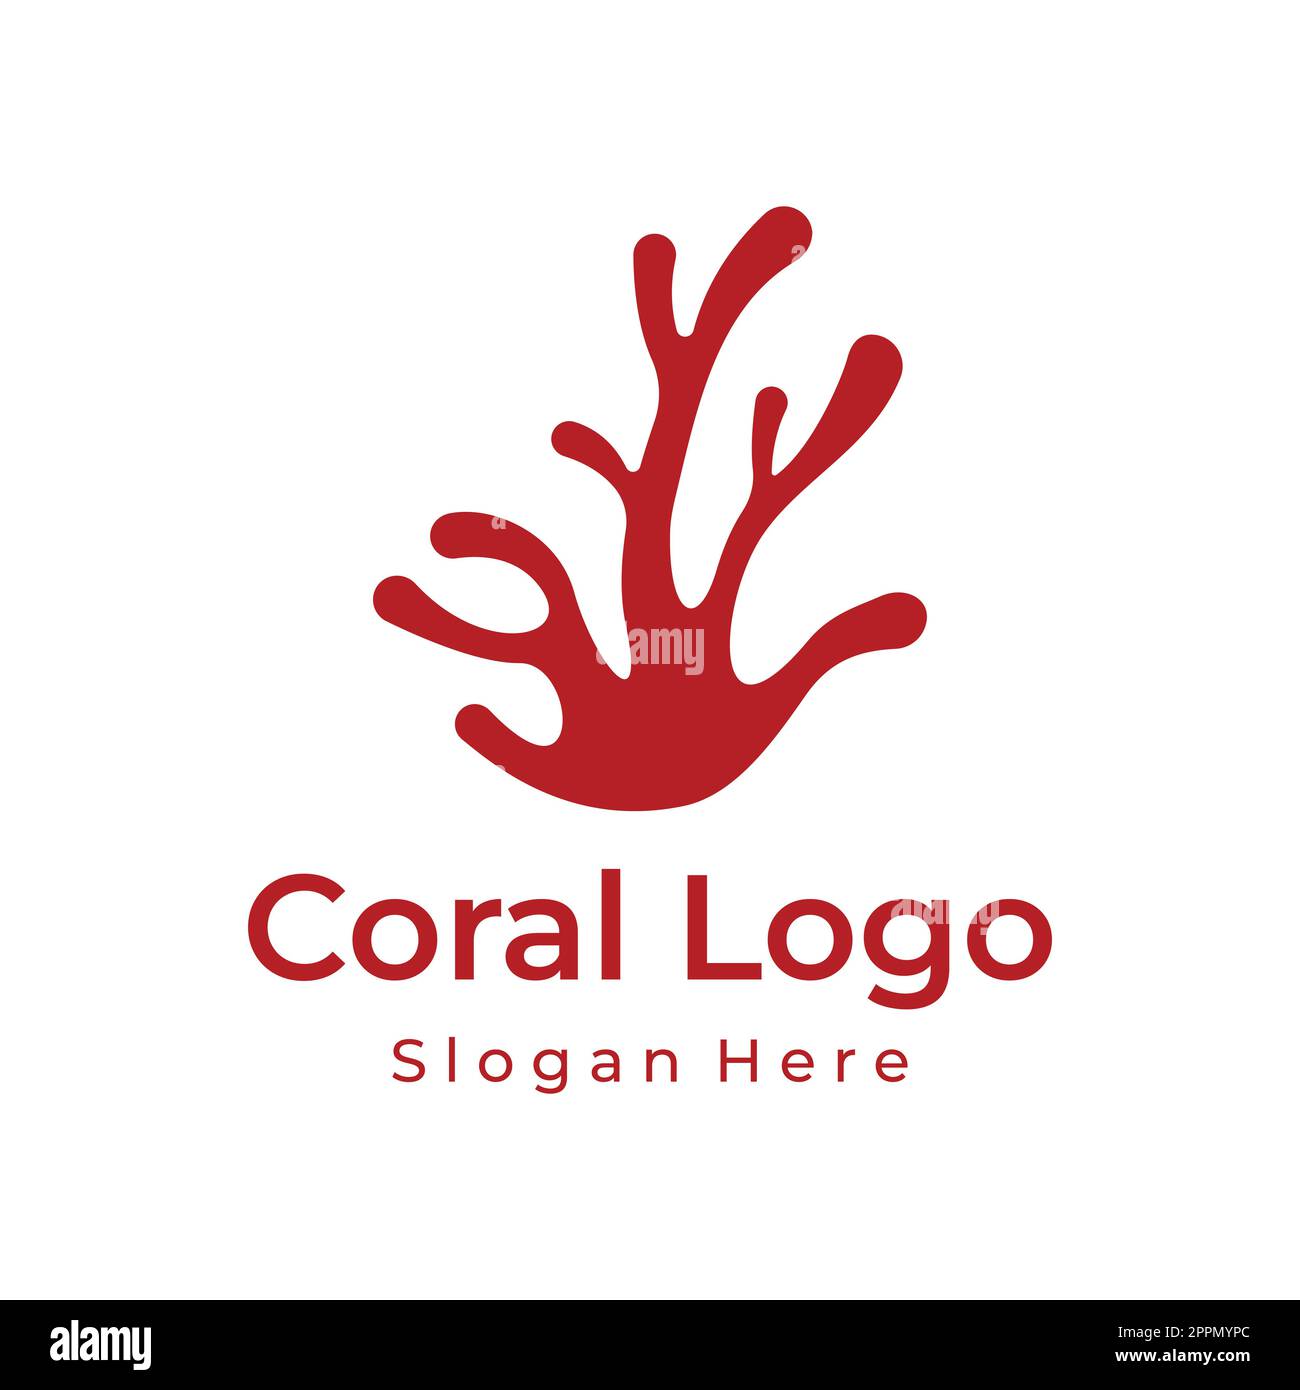 Coral Logos Cliparts, Stock Vector and Royalty Free Coral Logos  Illustrations